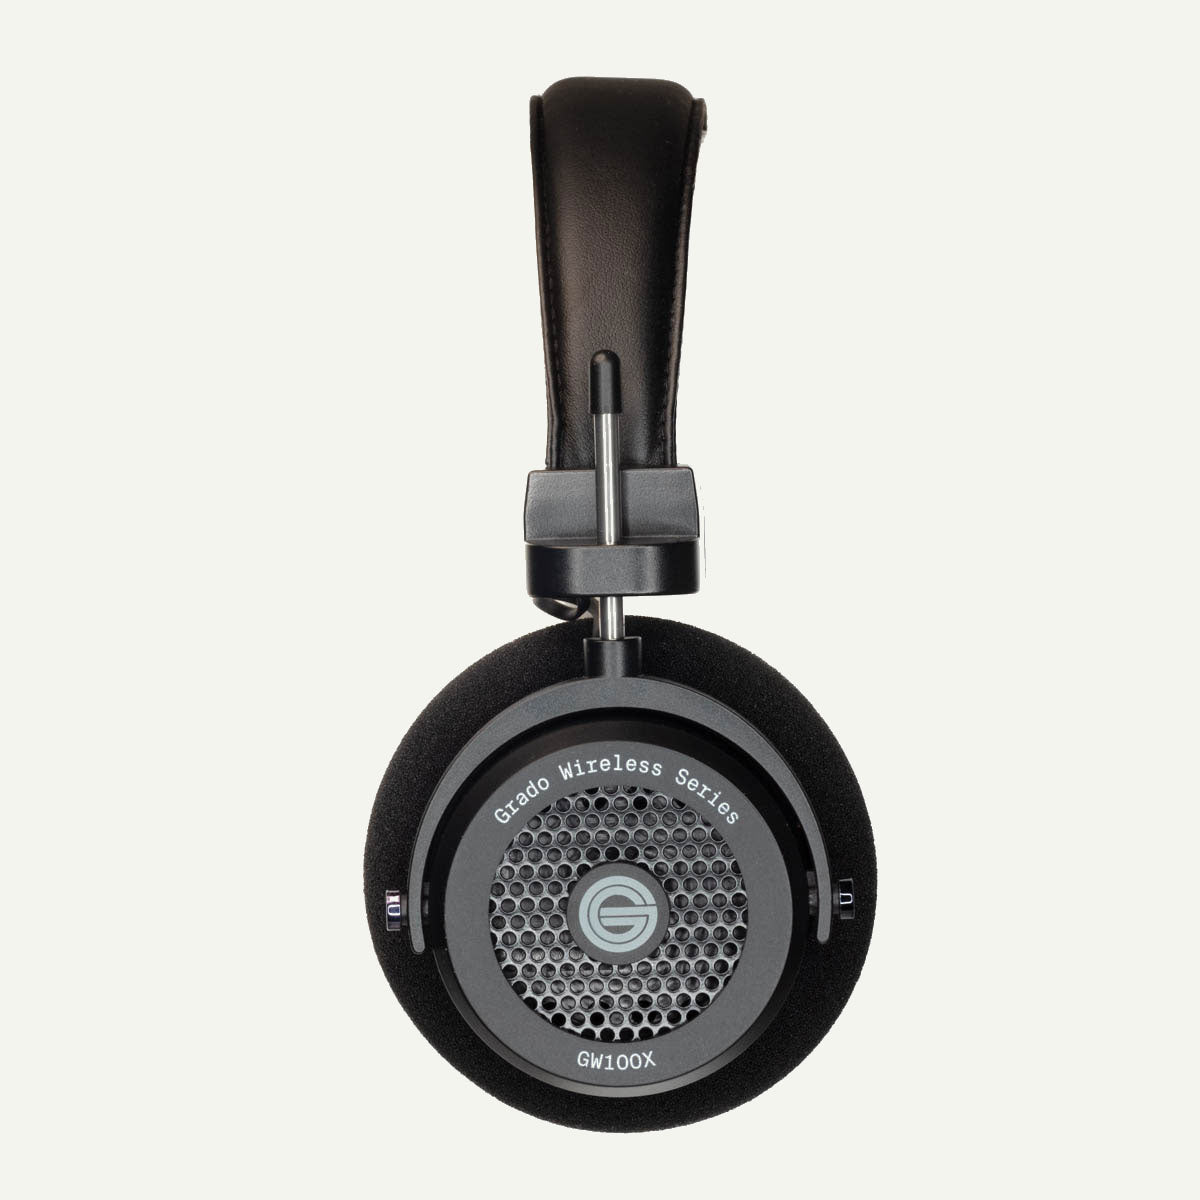 Grado wireless bluetooth headphones, GW100x, side 